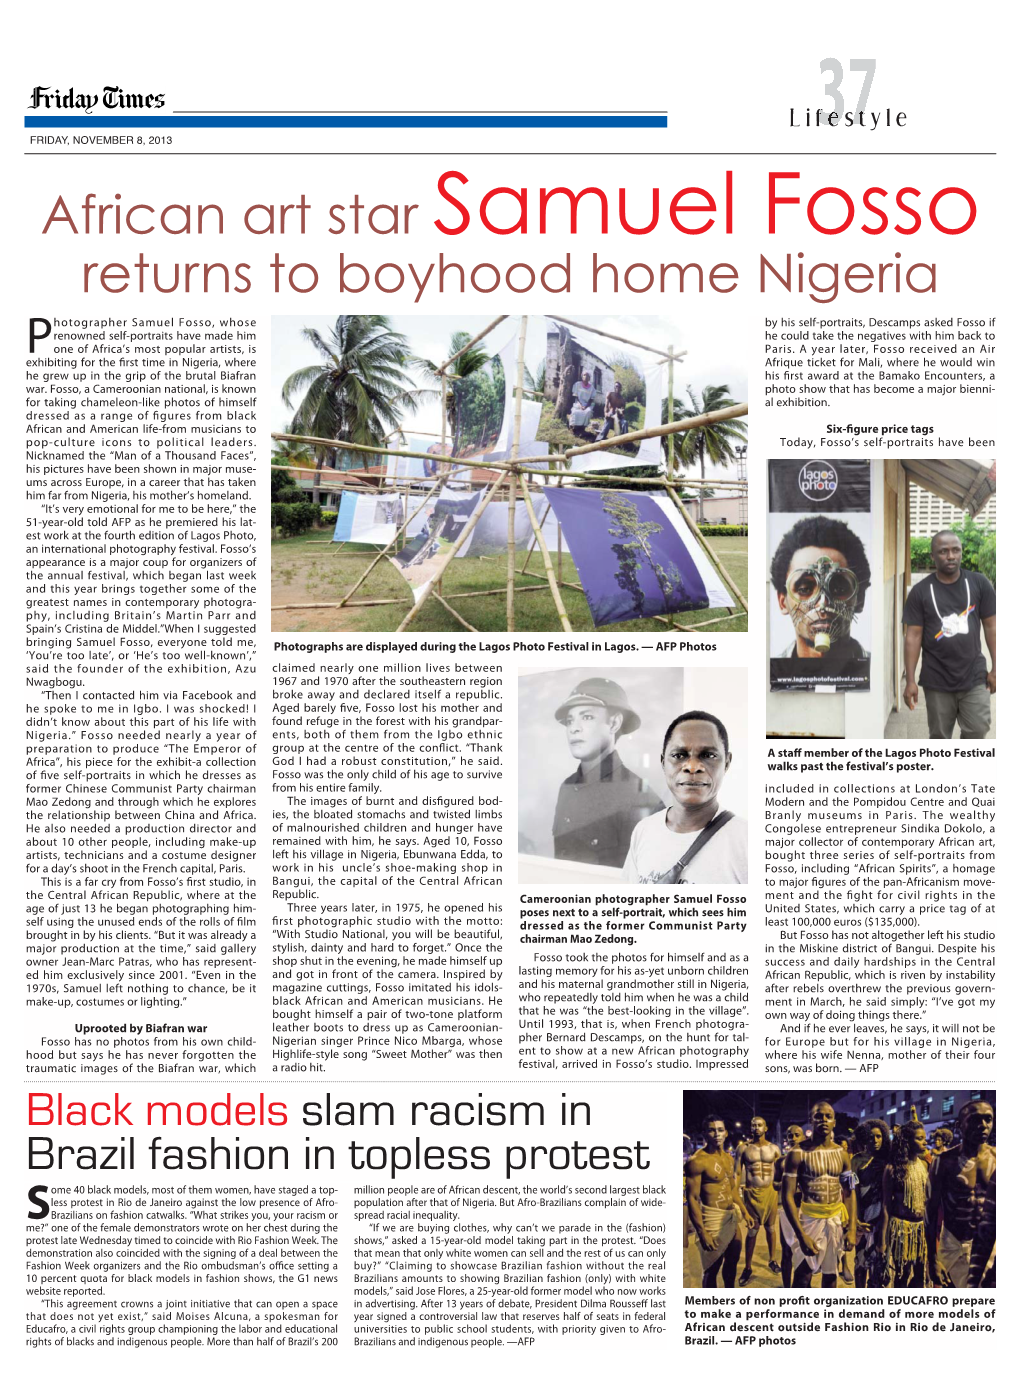 African Art Star Samuel Fosso Returns to Boyhood Home Nigeria